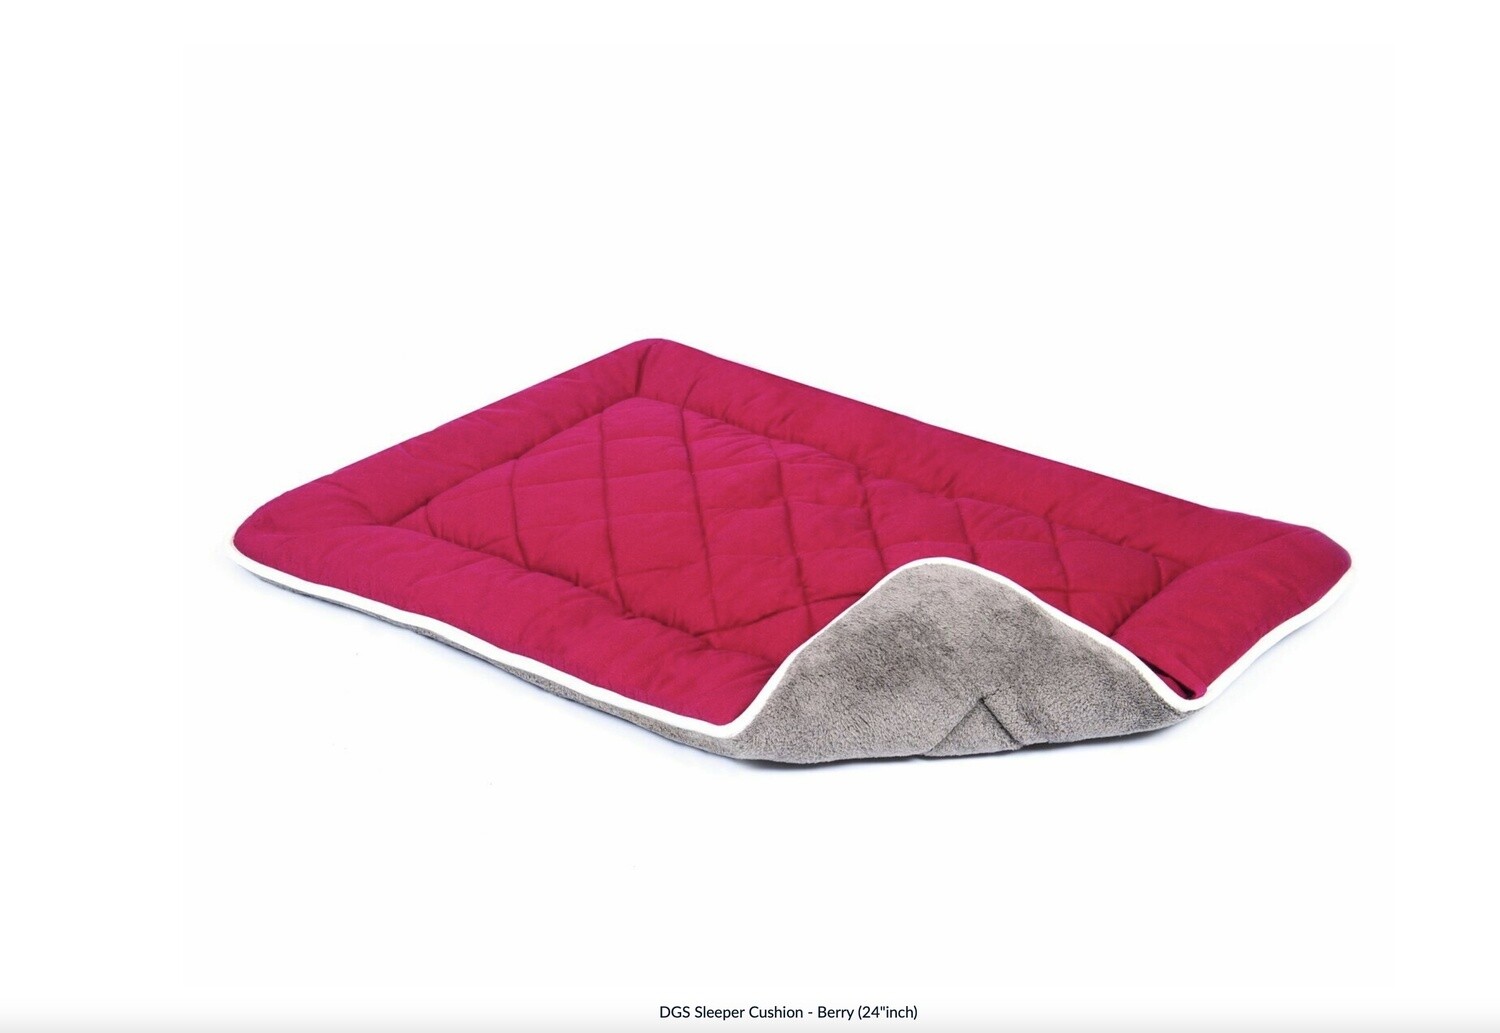 DGS Sleeper Cushion - Berry (24"inch)